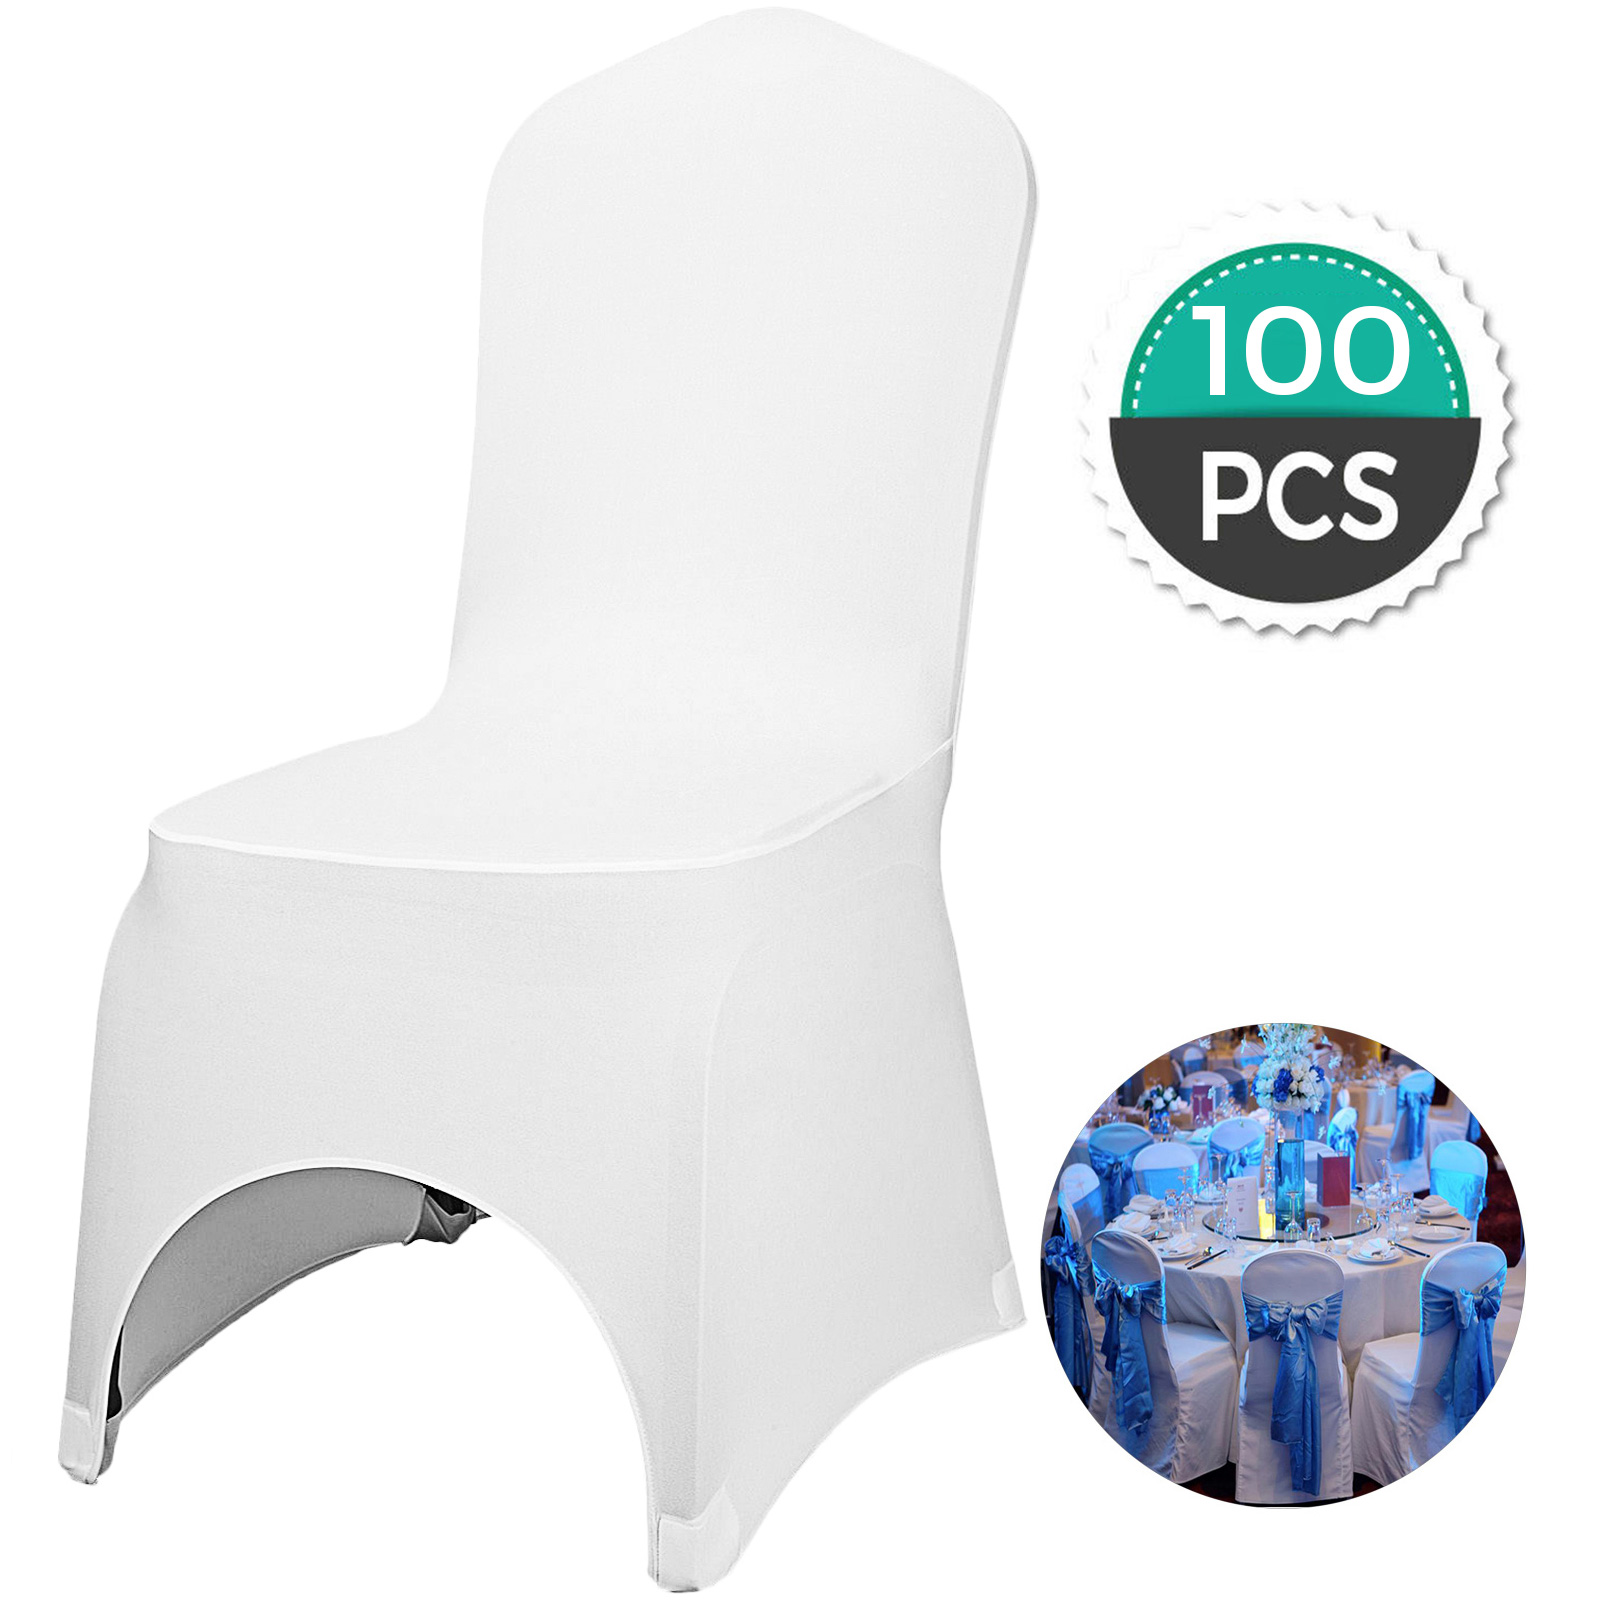 50 Premium Spandex Lycra Banquet Chair Covers Wedding Arch Front